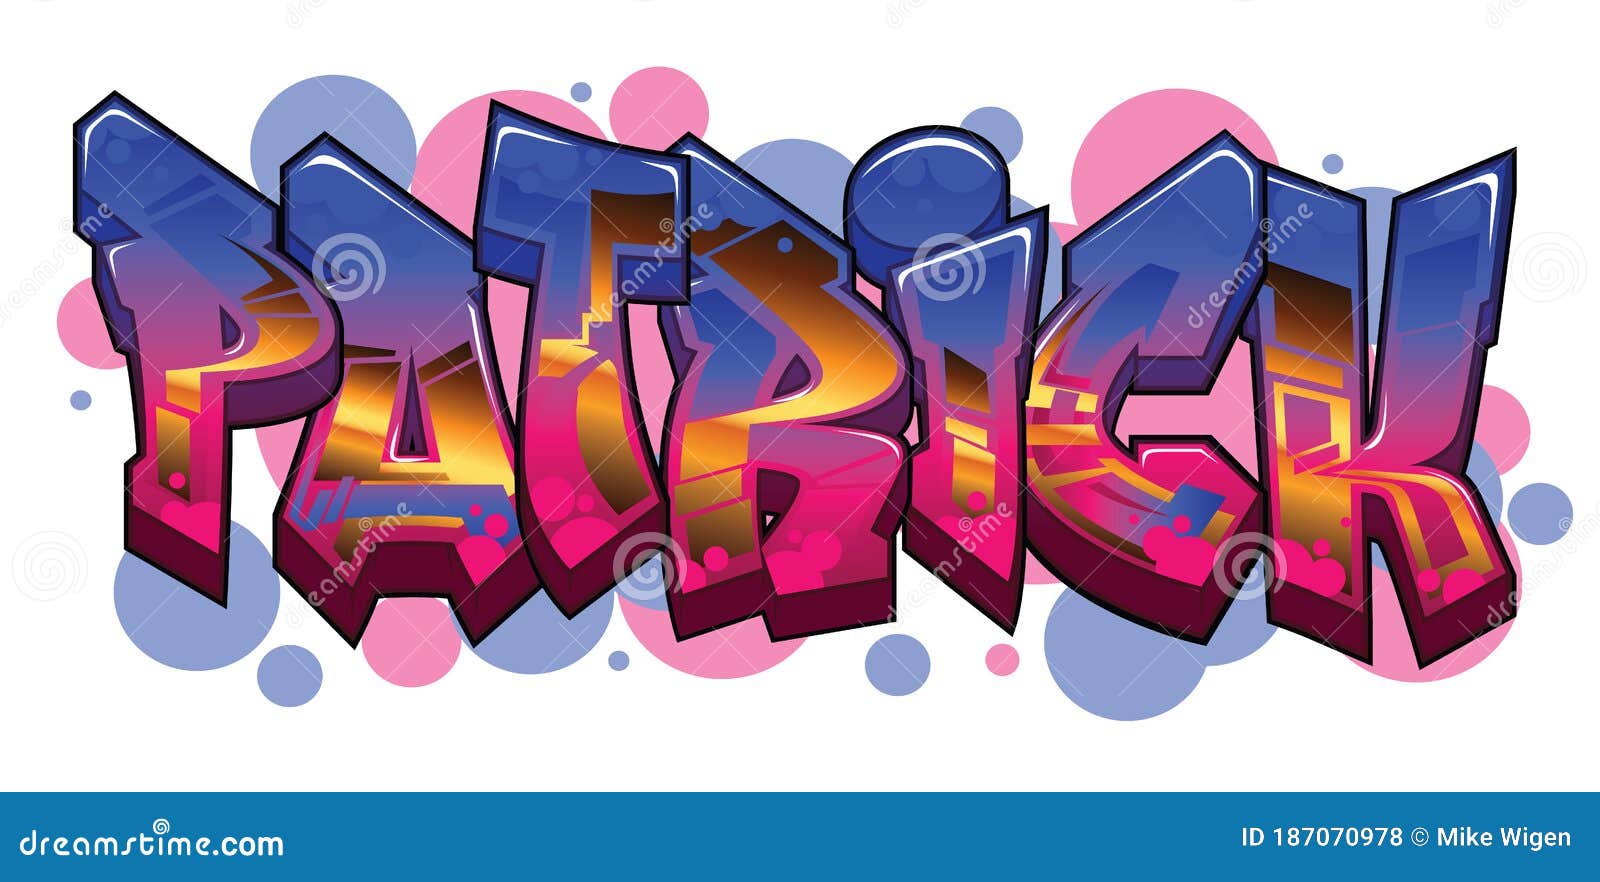 Patrick Name Text Graffiti Word Design Stock Illustration Illustration Of Street Alley